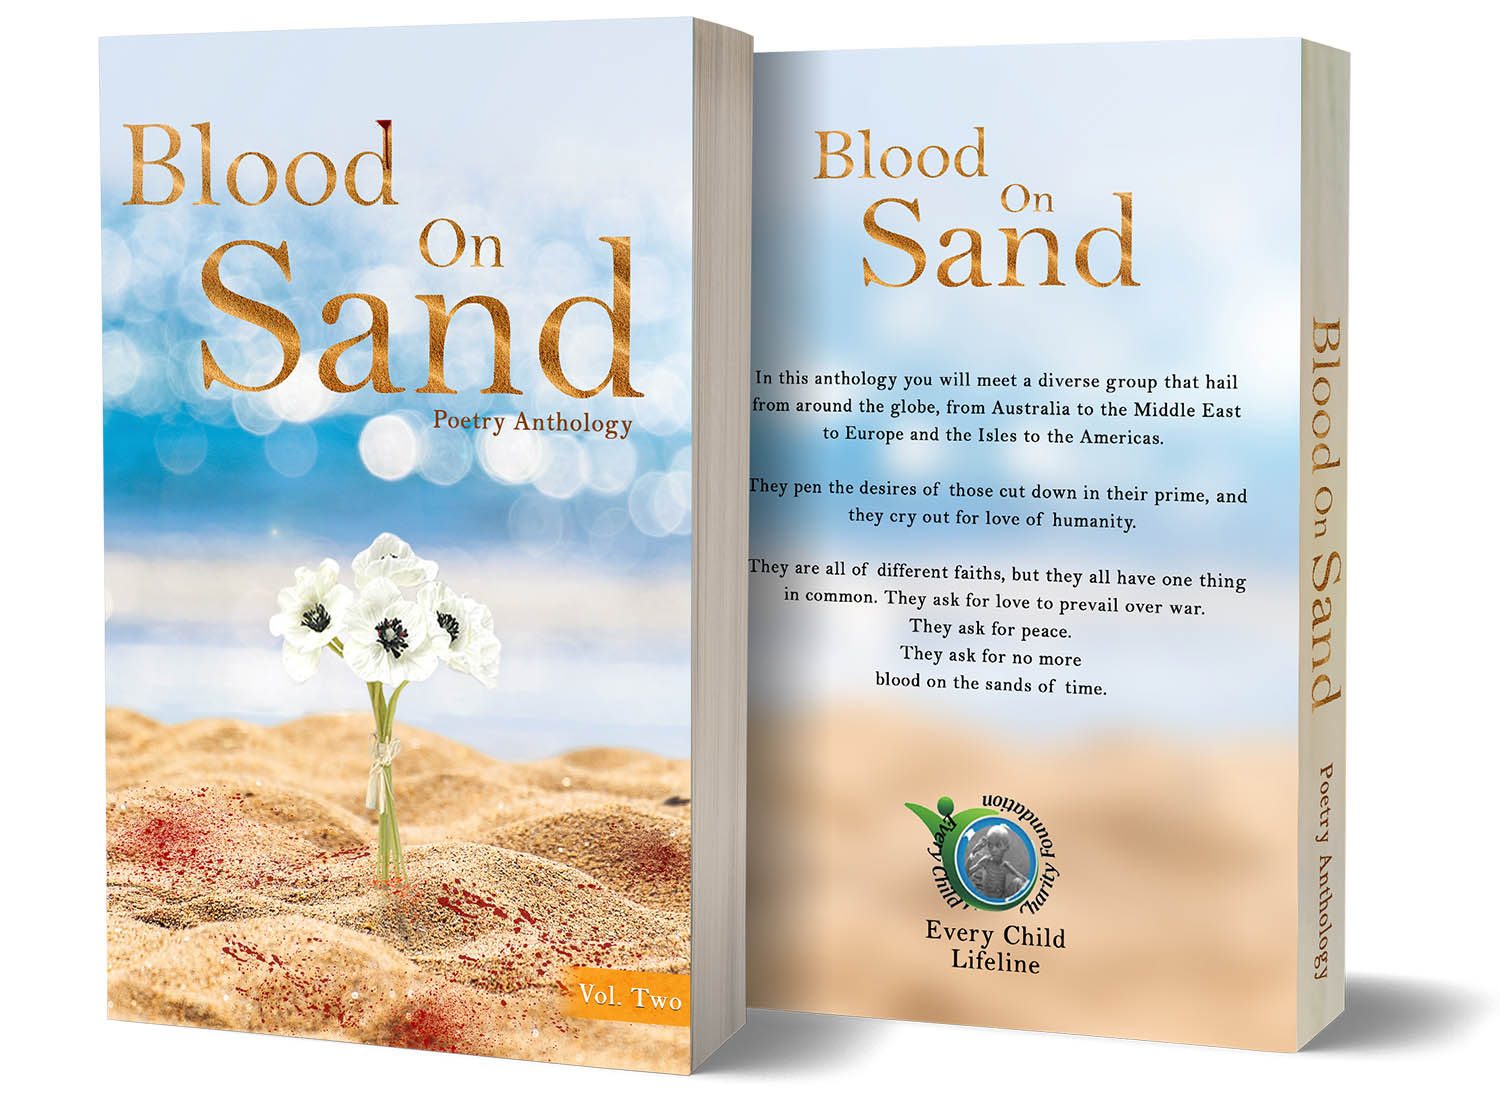 bookconsilio-portfolio-Blood-on-sand-paperback-bookcoverdesign